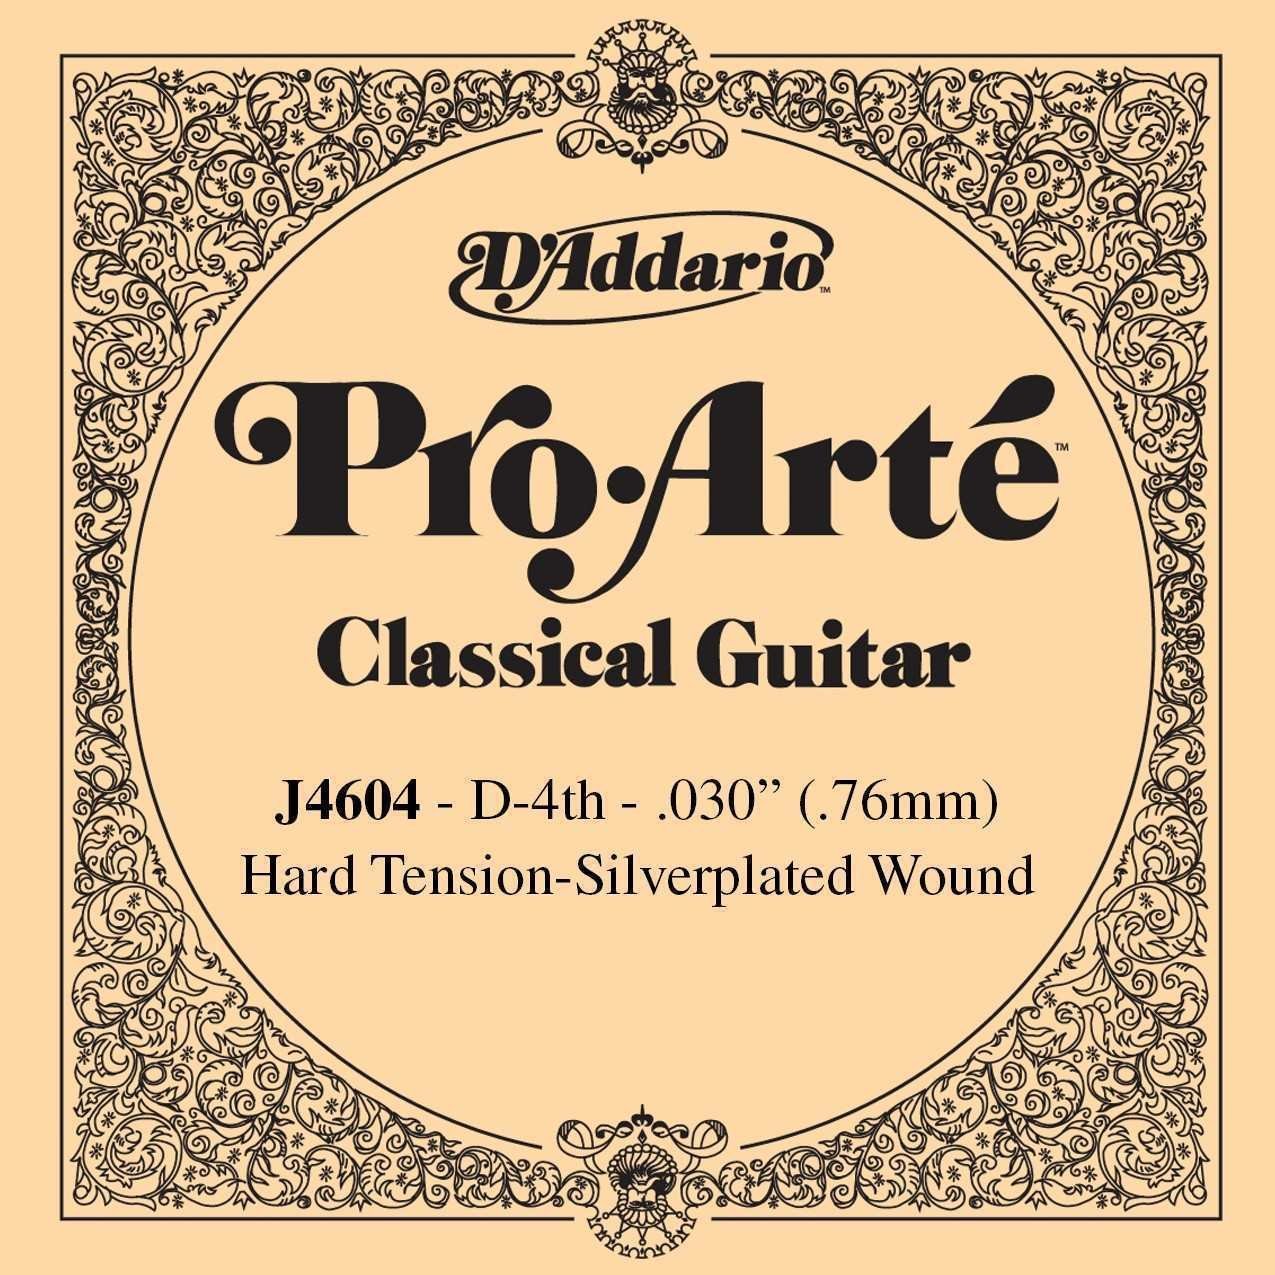 Különálló klasszikus gitárhúr D'Addario J4604 Különálló klasszikus gitárhúr